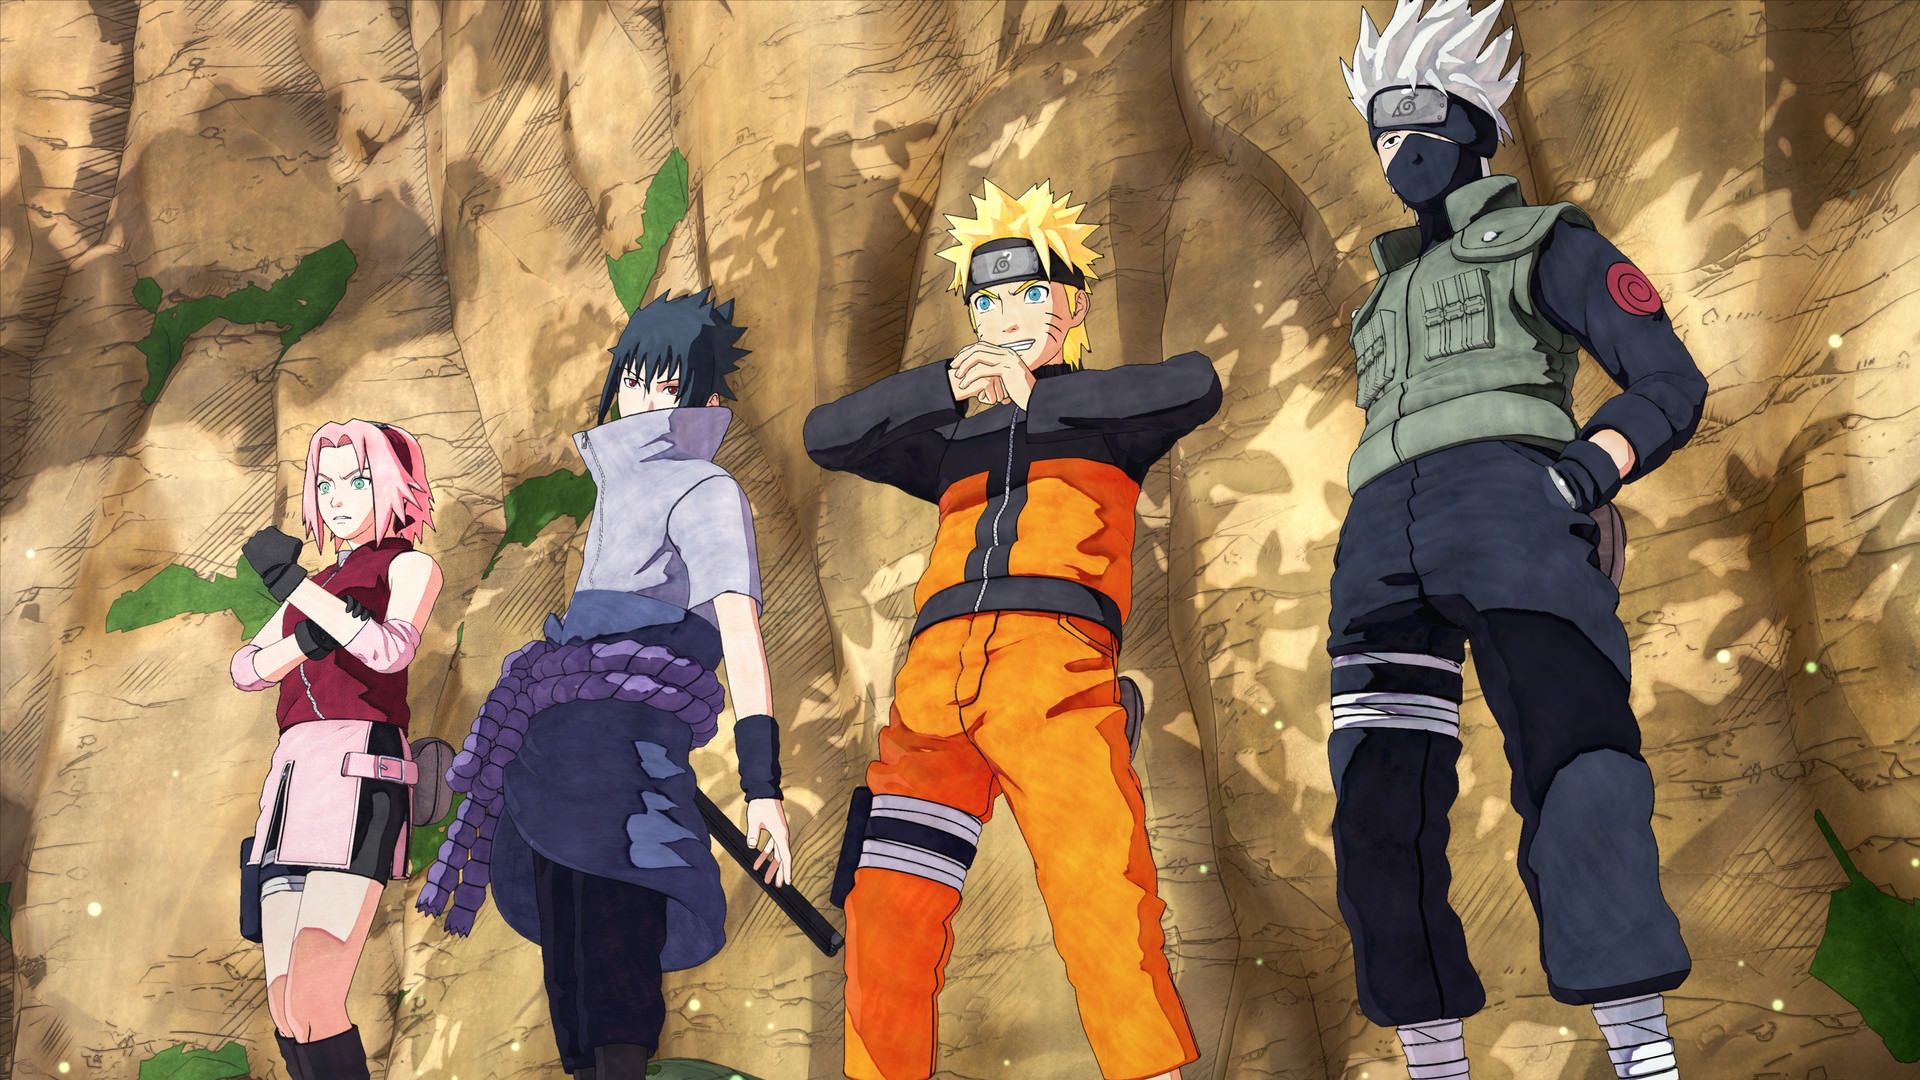 Naruto Group Wallpapers